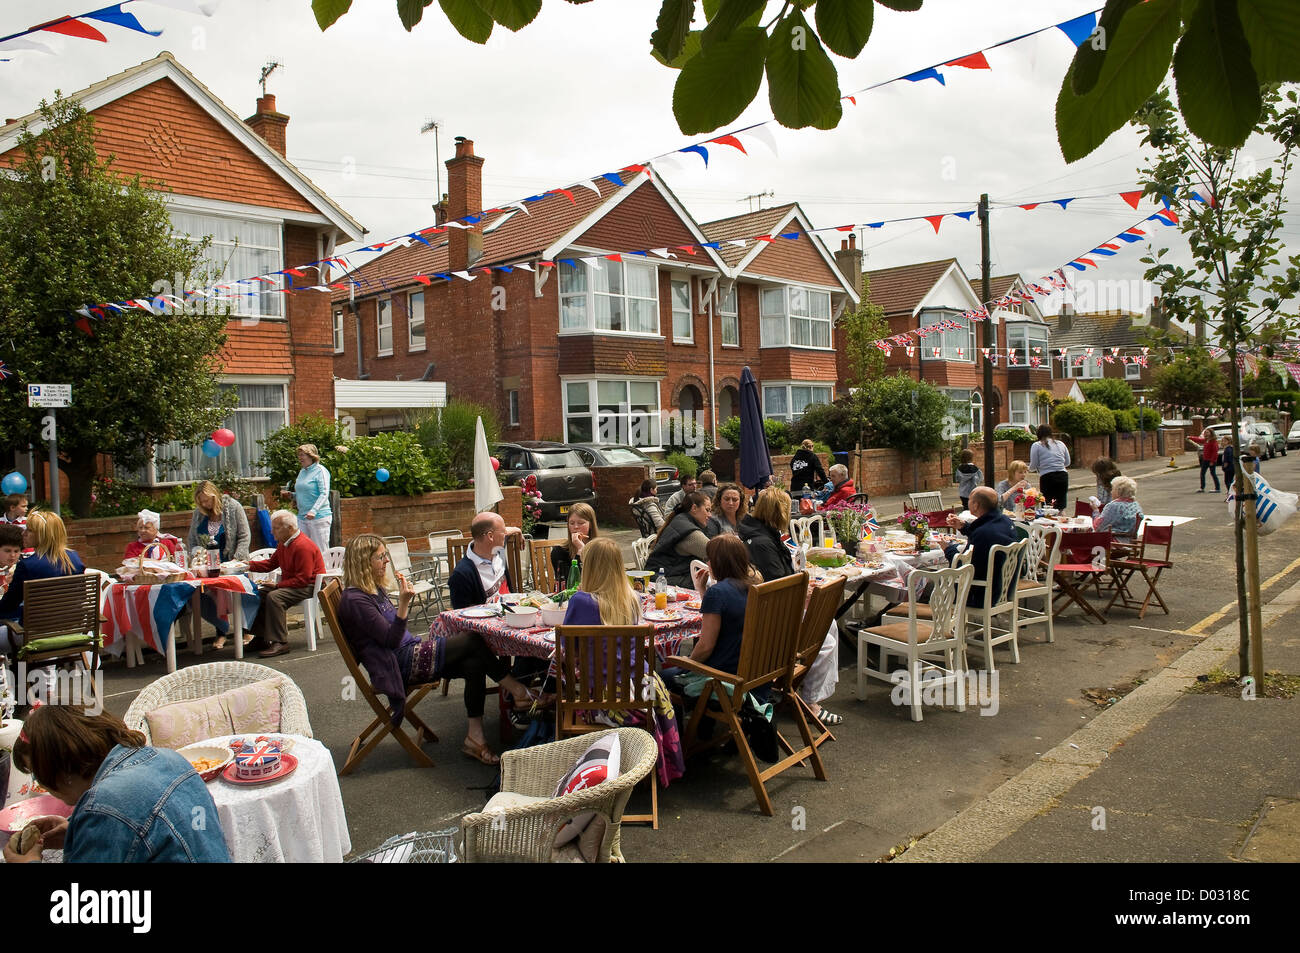 Street party for Queen Elizabeth II's Diamond Jubilee in Worthing, West Sussex, UK Stock Photo